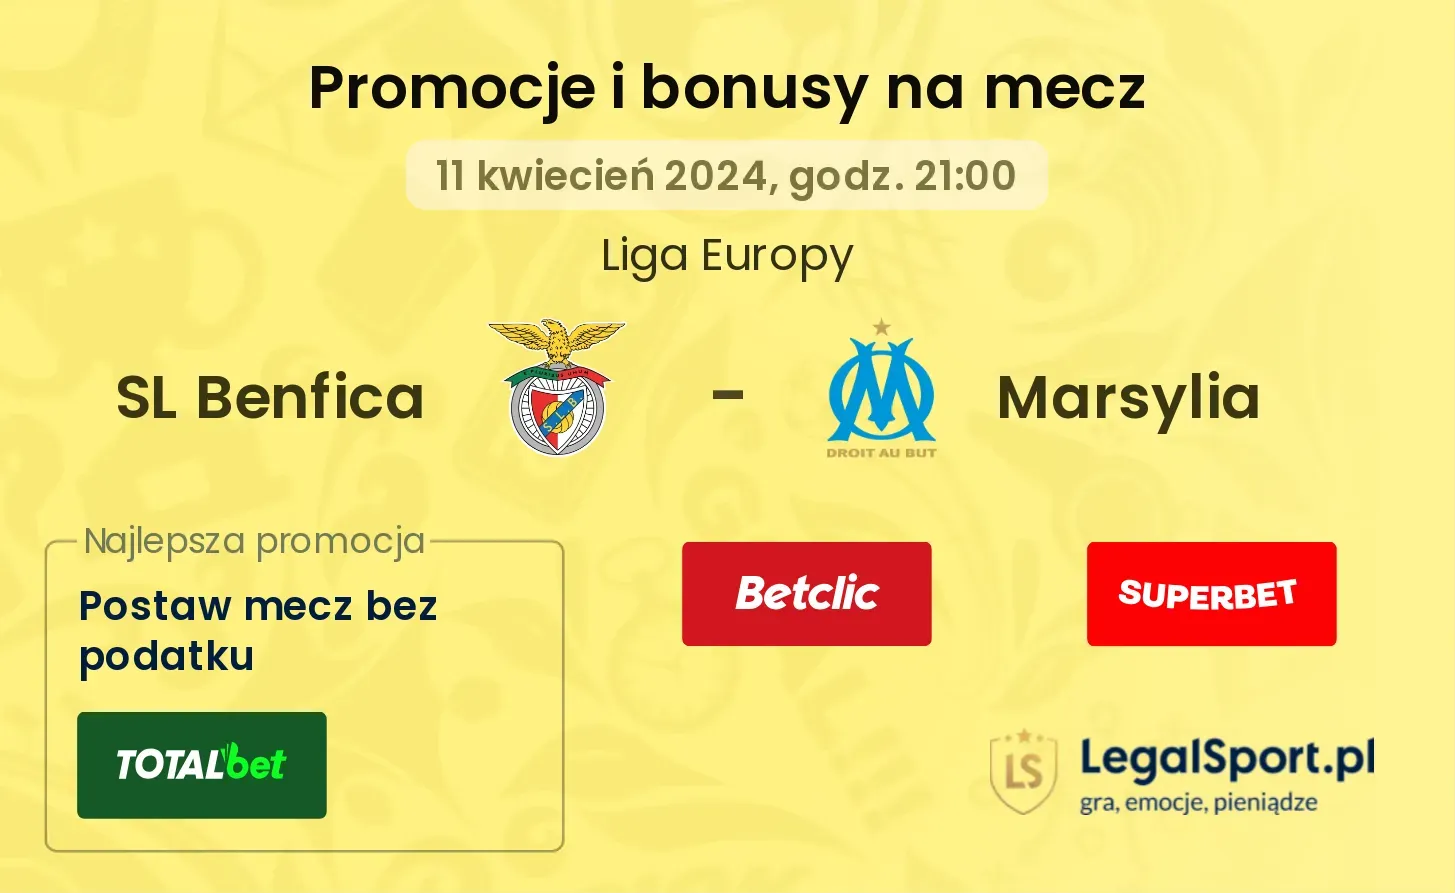 SL Benfica - Marsylia promocje bonusy na mecz